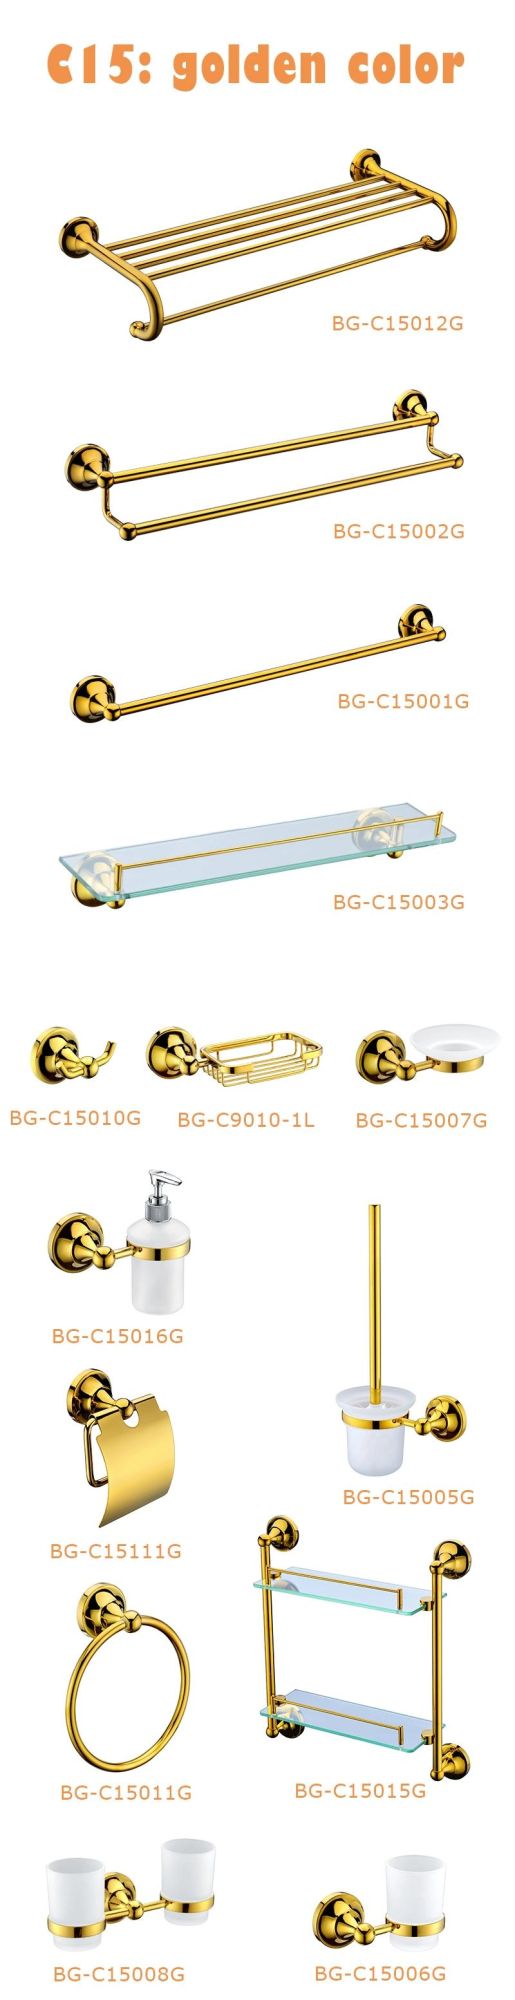 Sanitary Ware Bathroom Accessories Golden Color Towel Holder Bg-C15002g